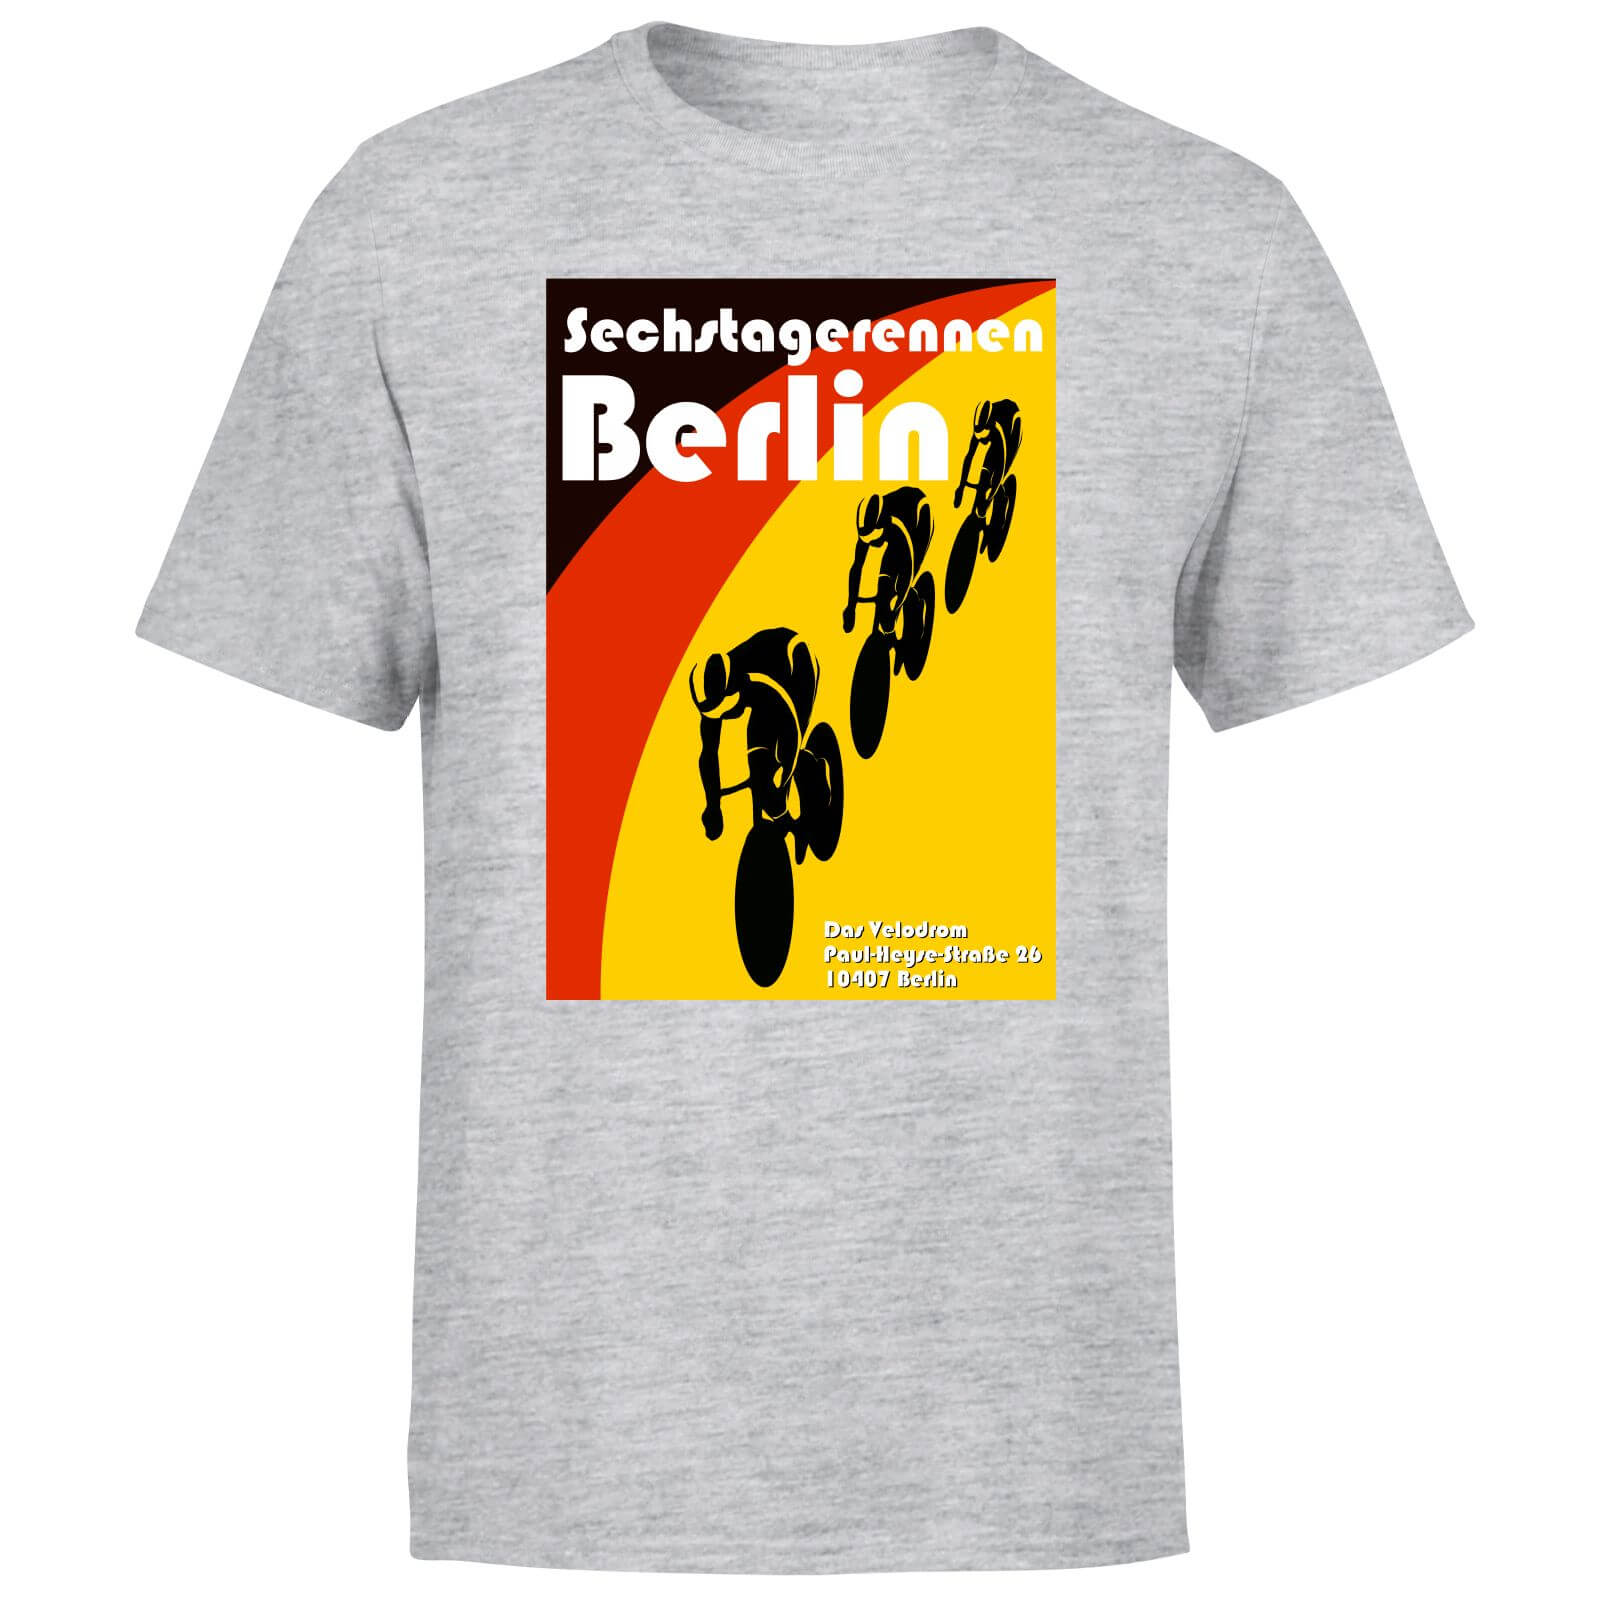 Six Days Berlin Men's T-Shirt - Grey - 5XL - Grey